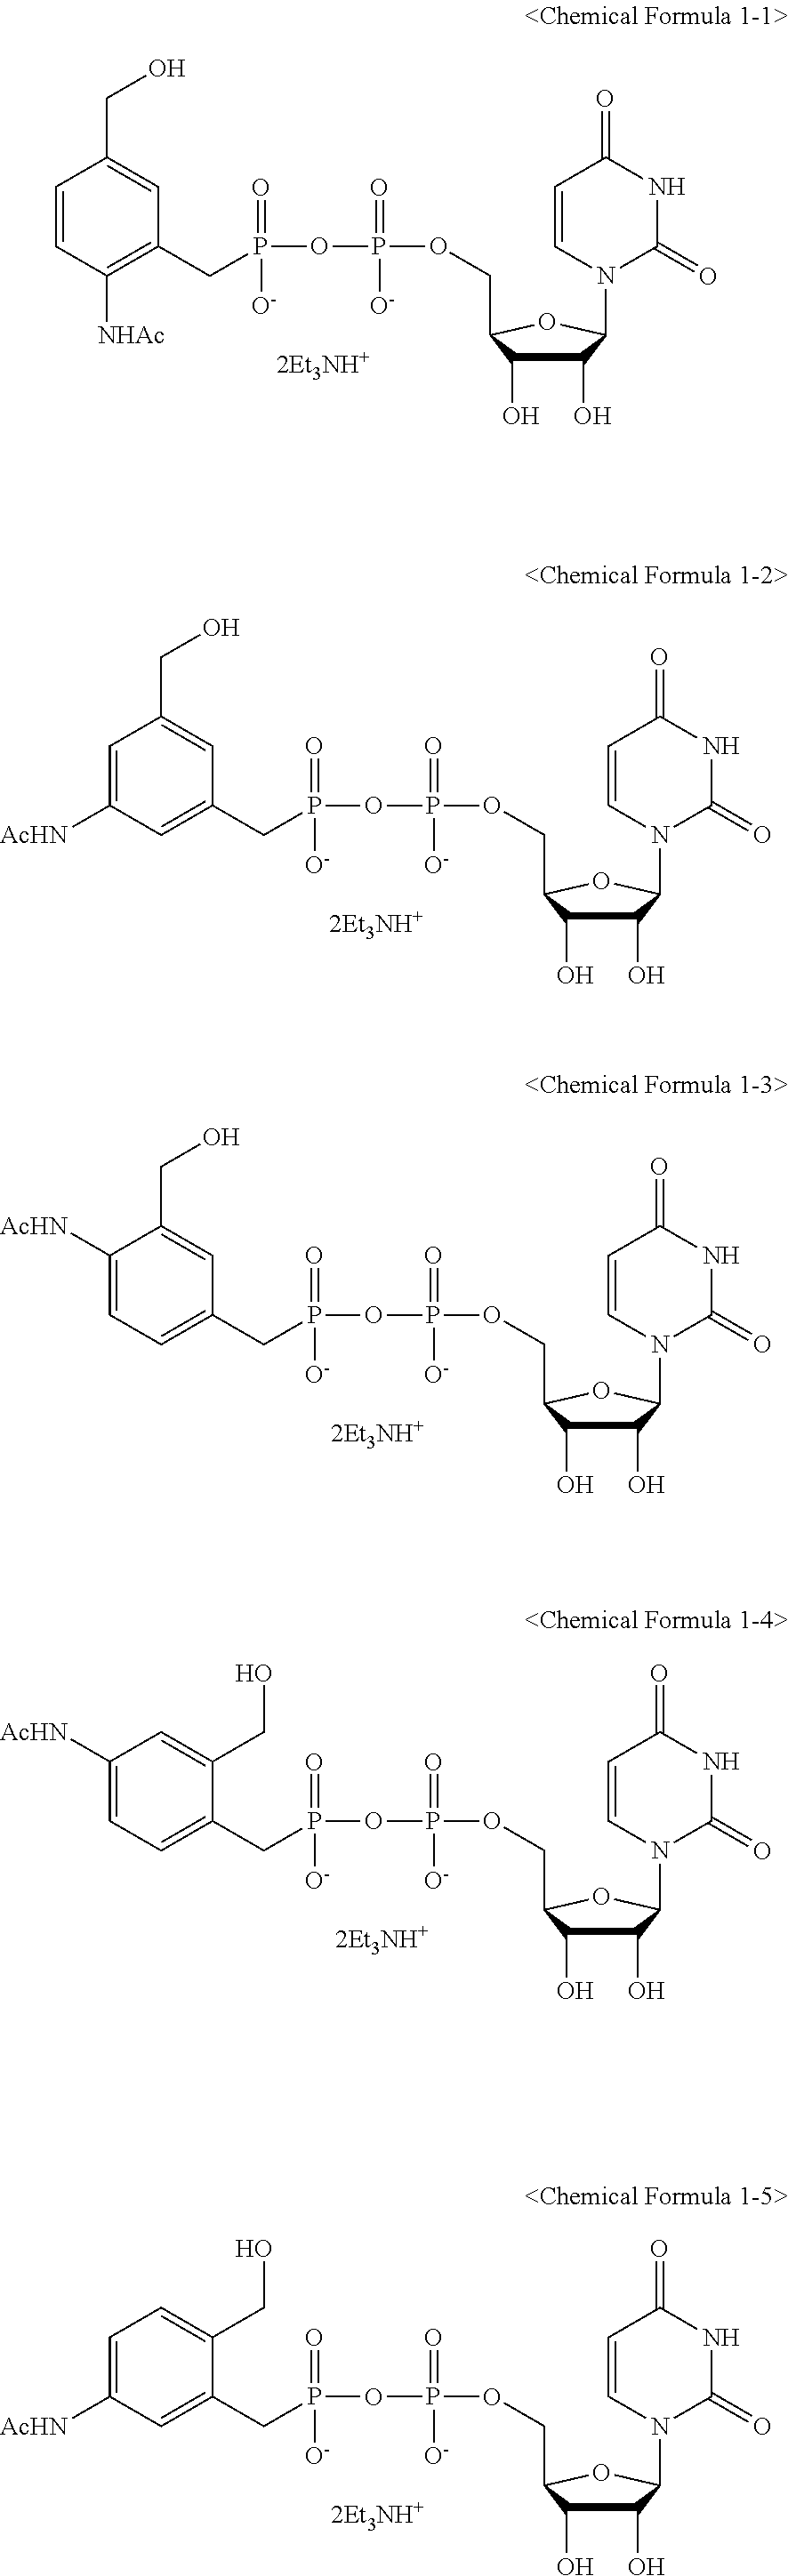 C1-phostphonate analogue of UDP-GlcNAc for inhibition of O-GlcNAc transferase